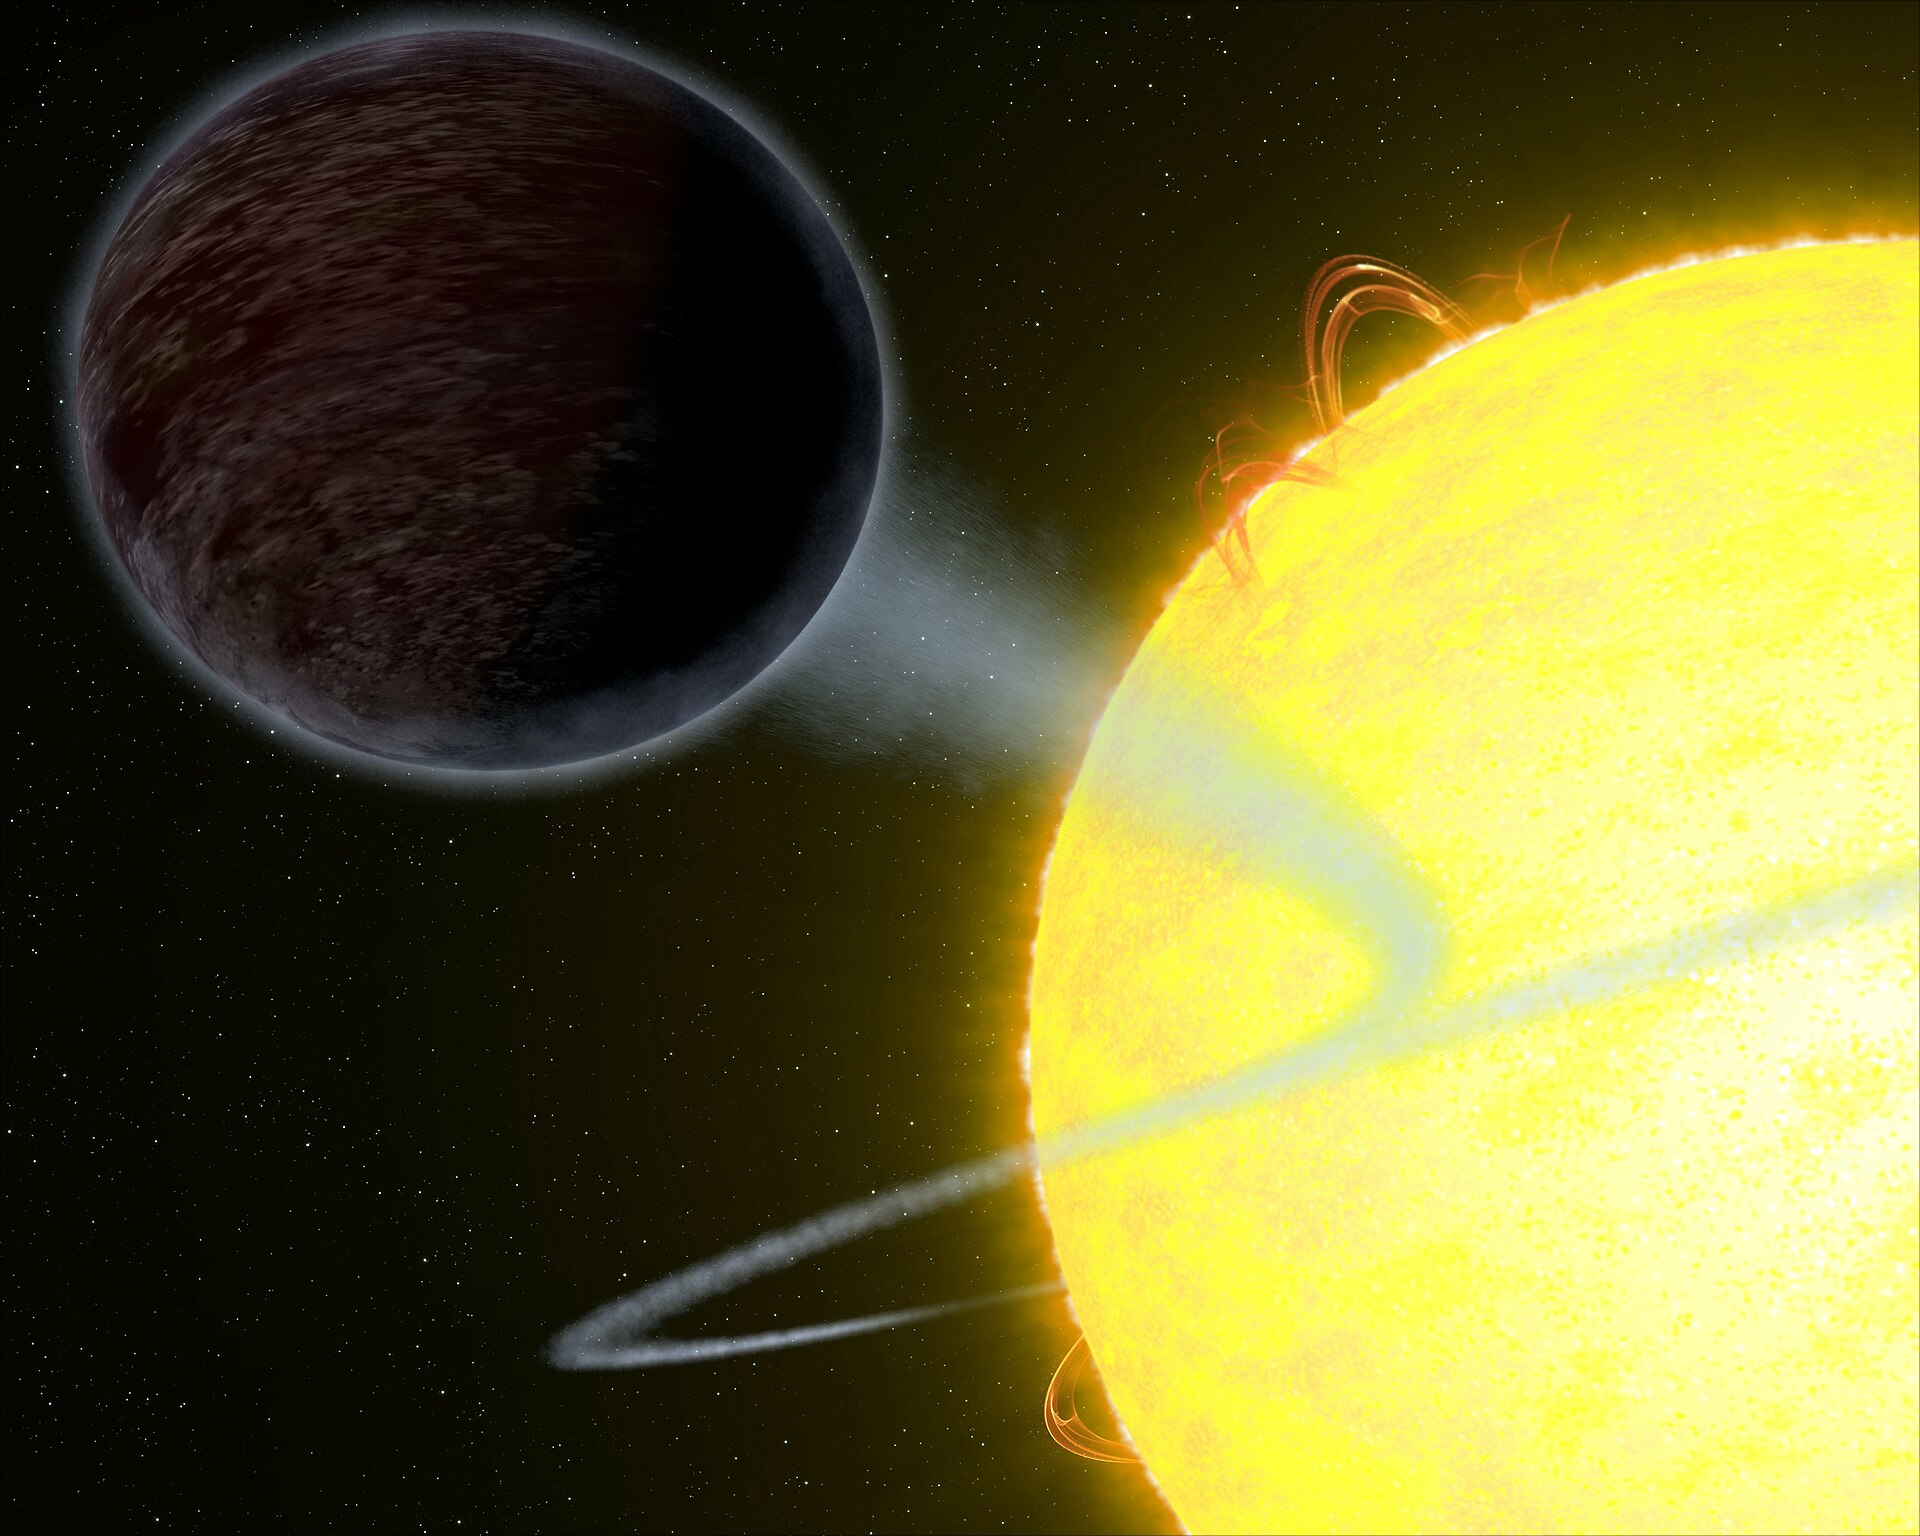 Source: ESA/Hubble